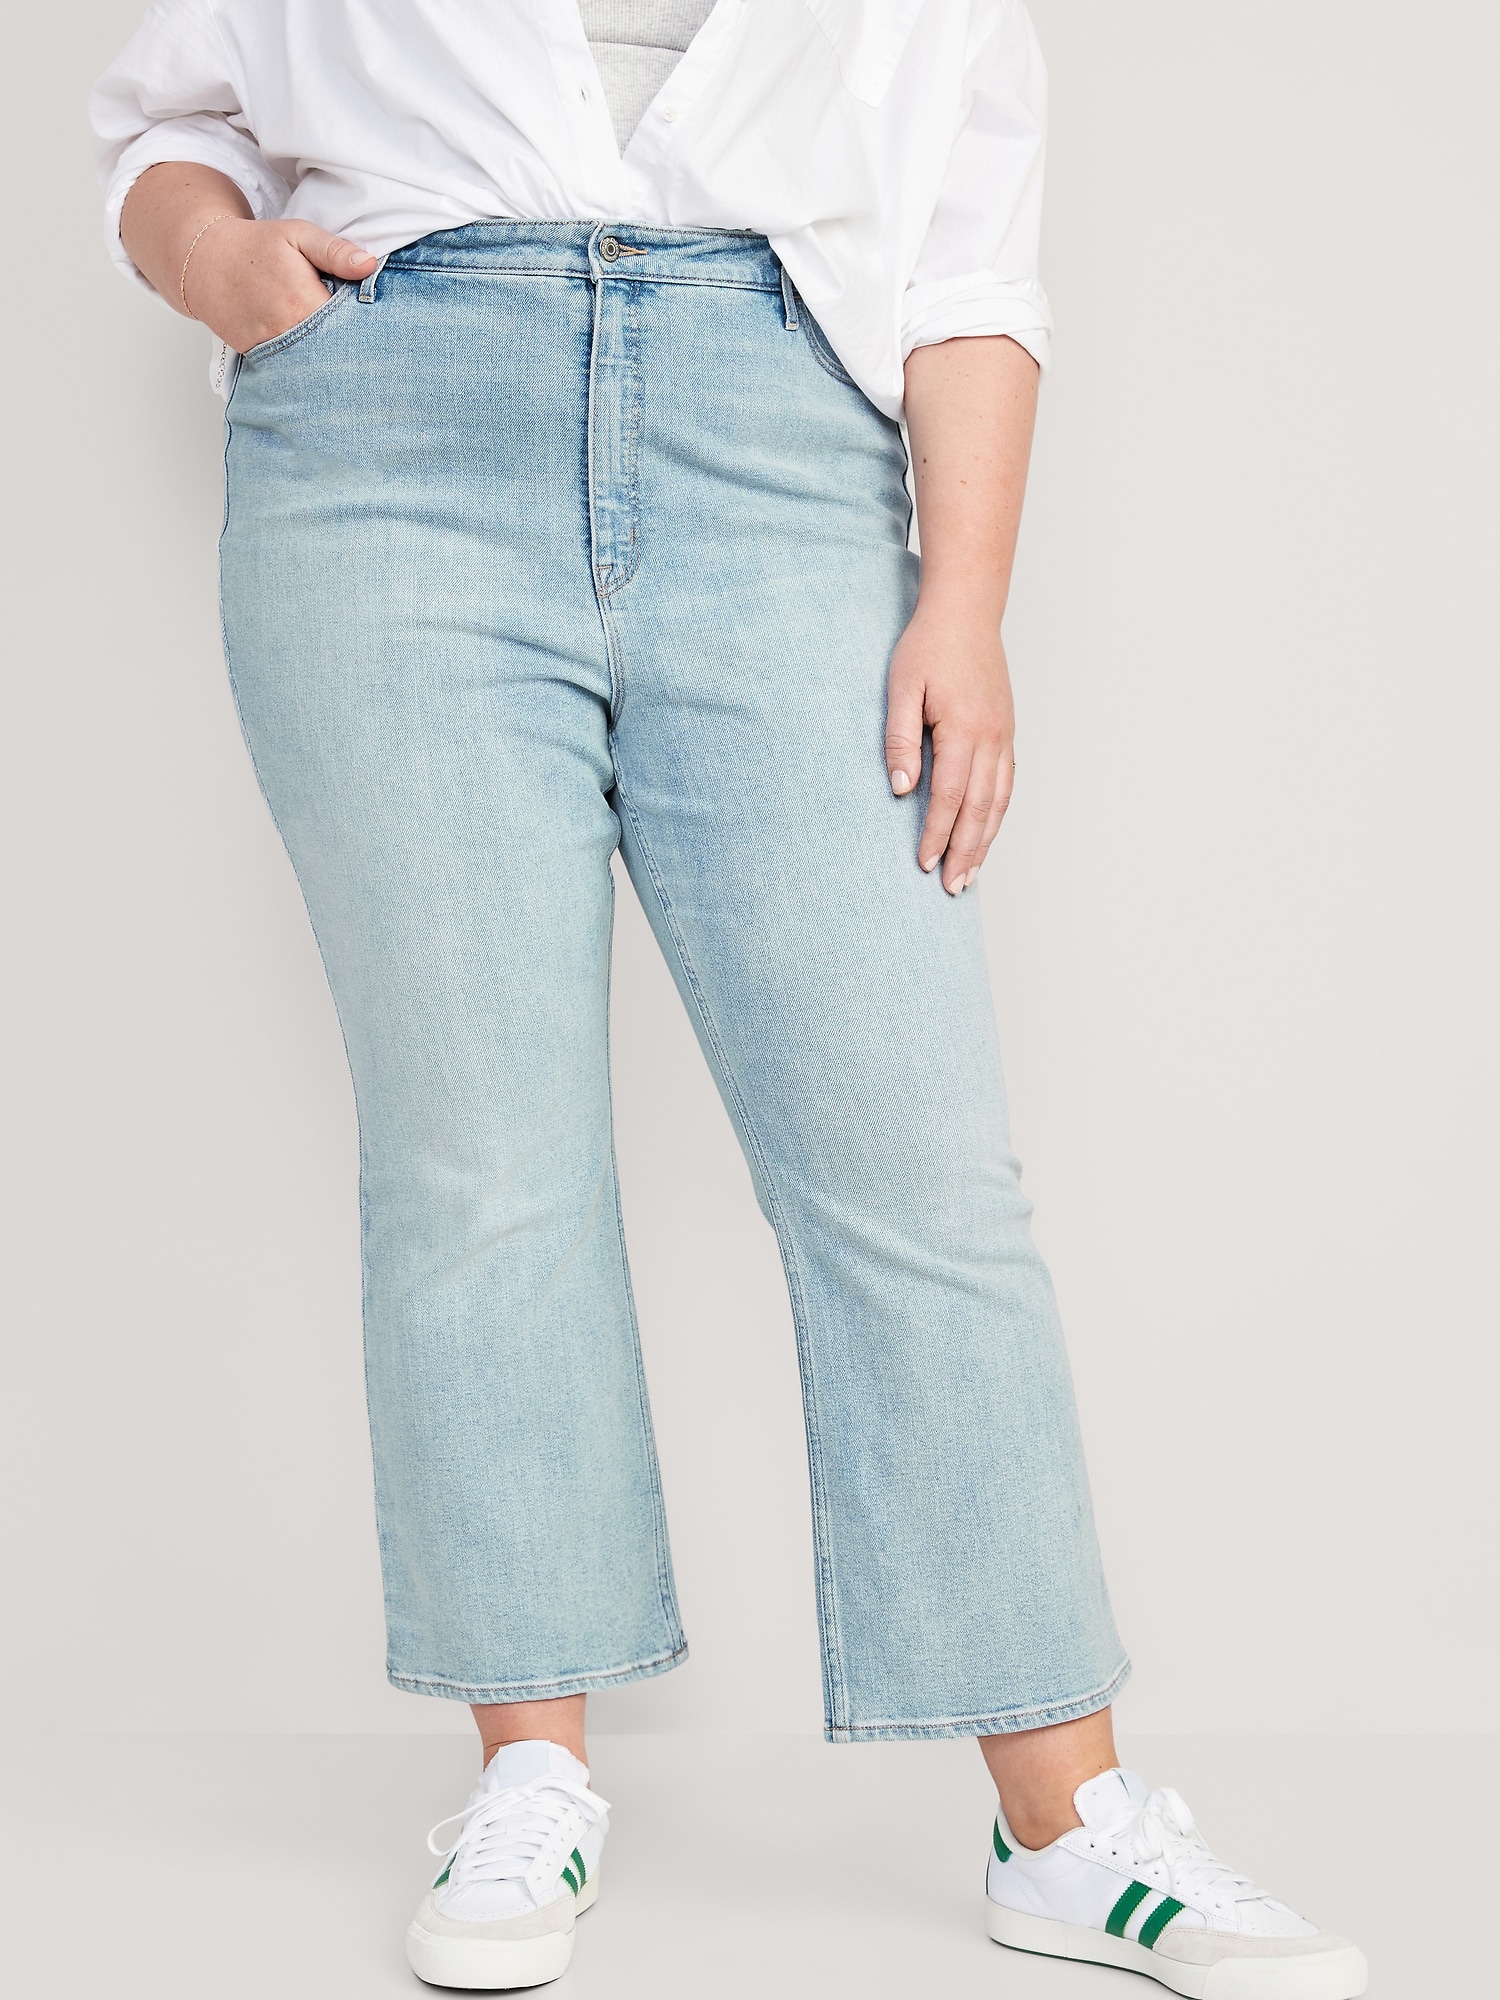 Women's jeans high waist cropped flare leg light blue – CROSS JEANS